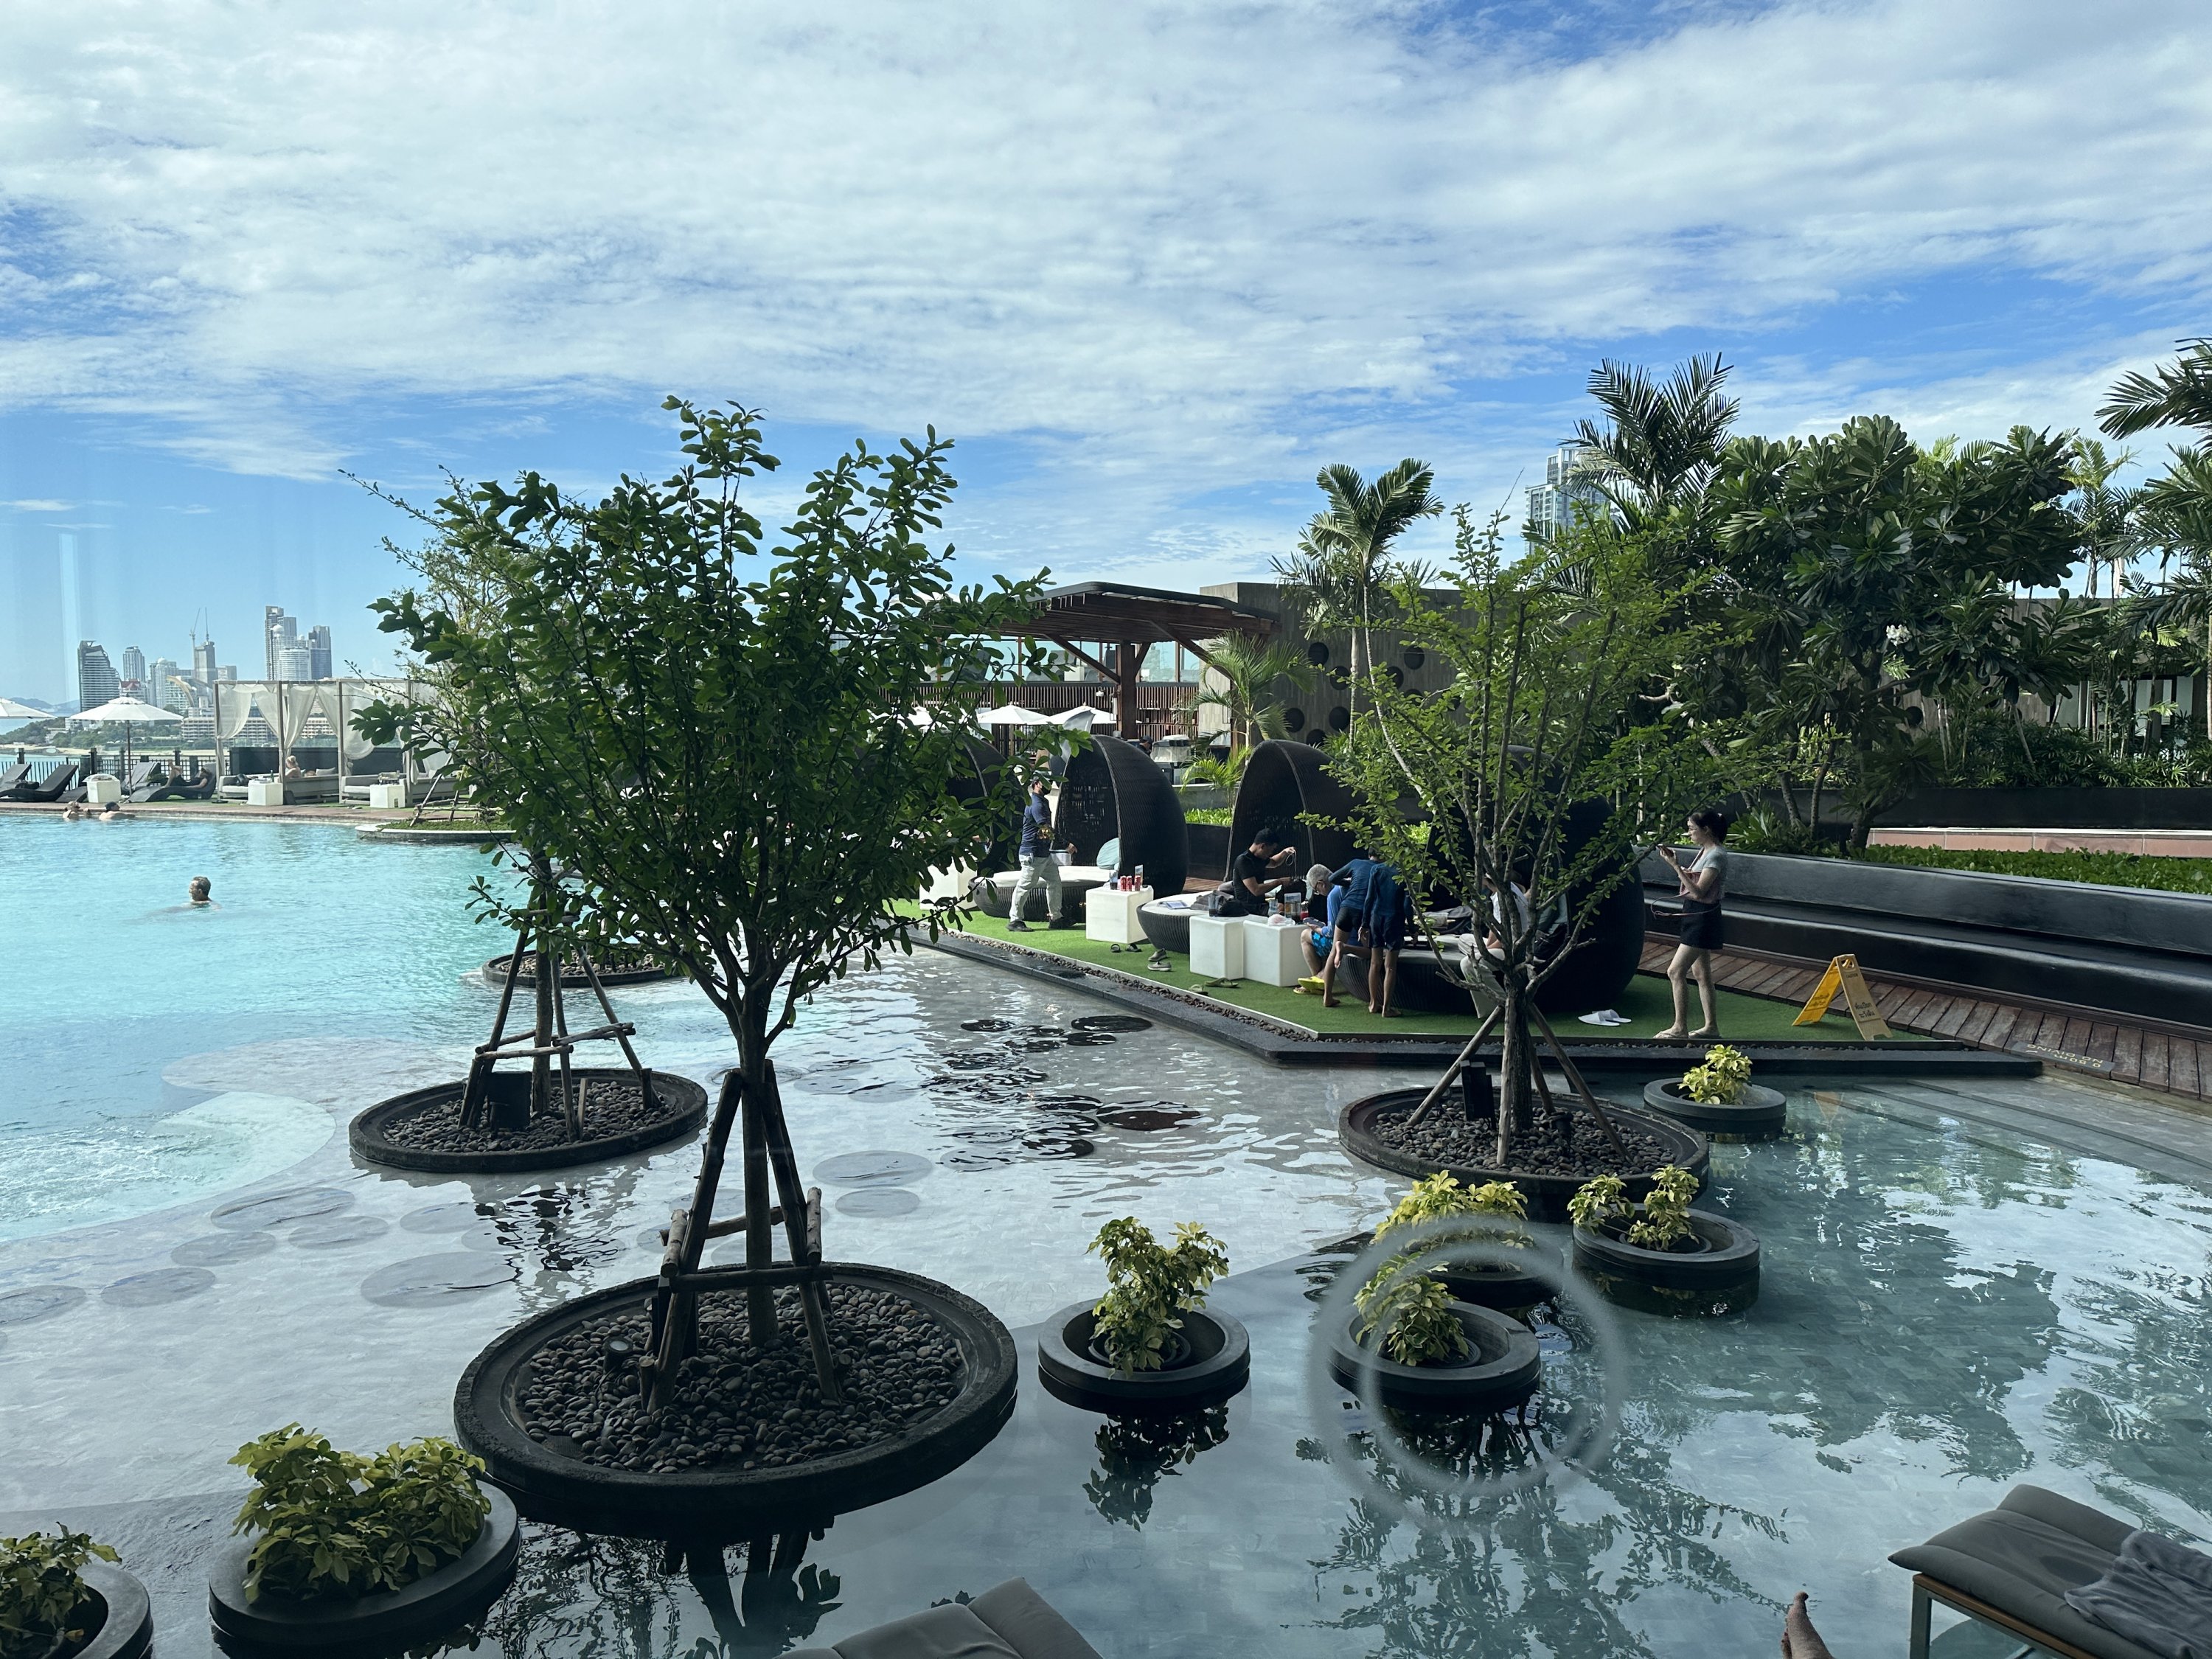 Hilton Pattaya | ȡ